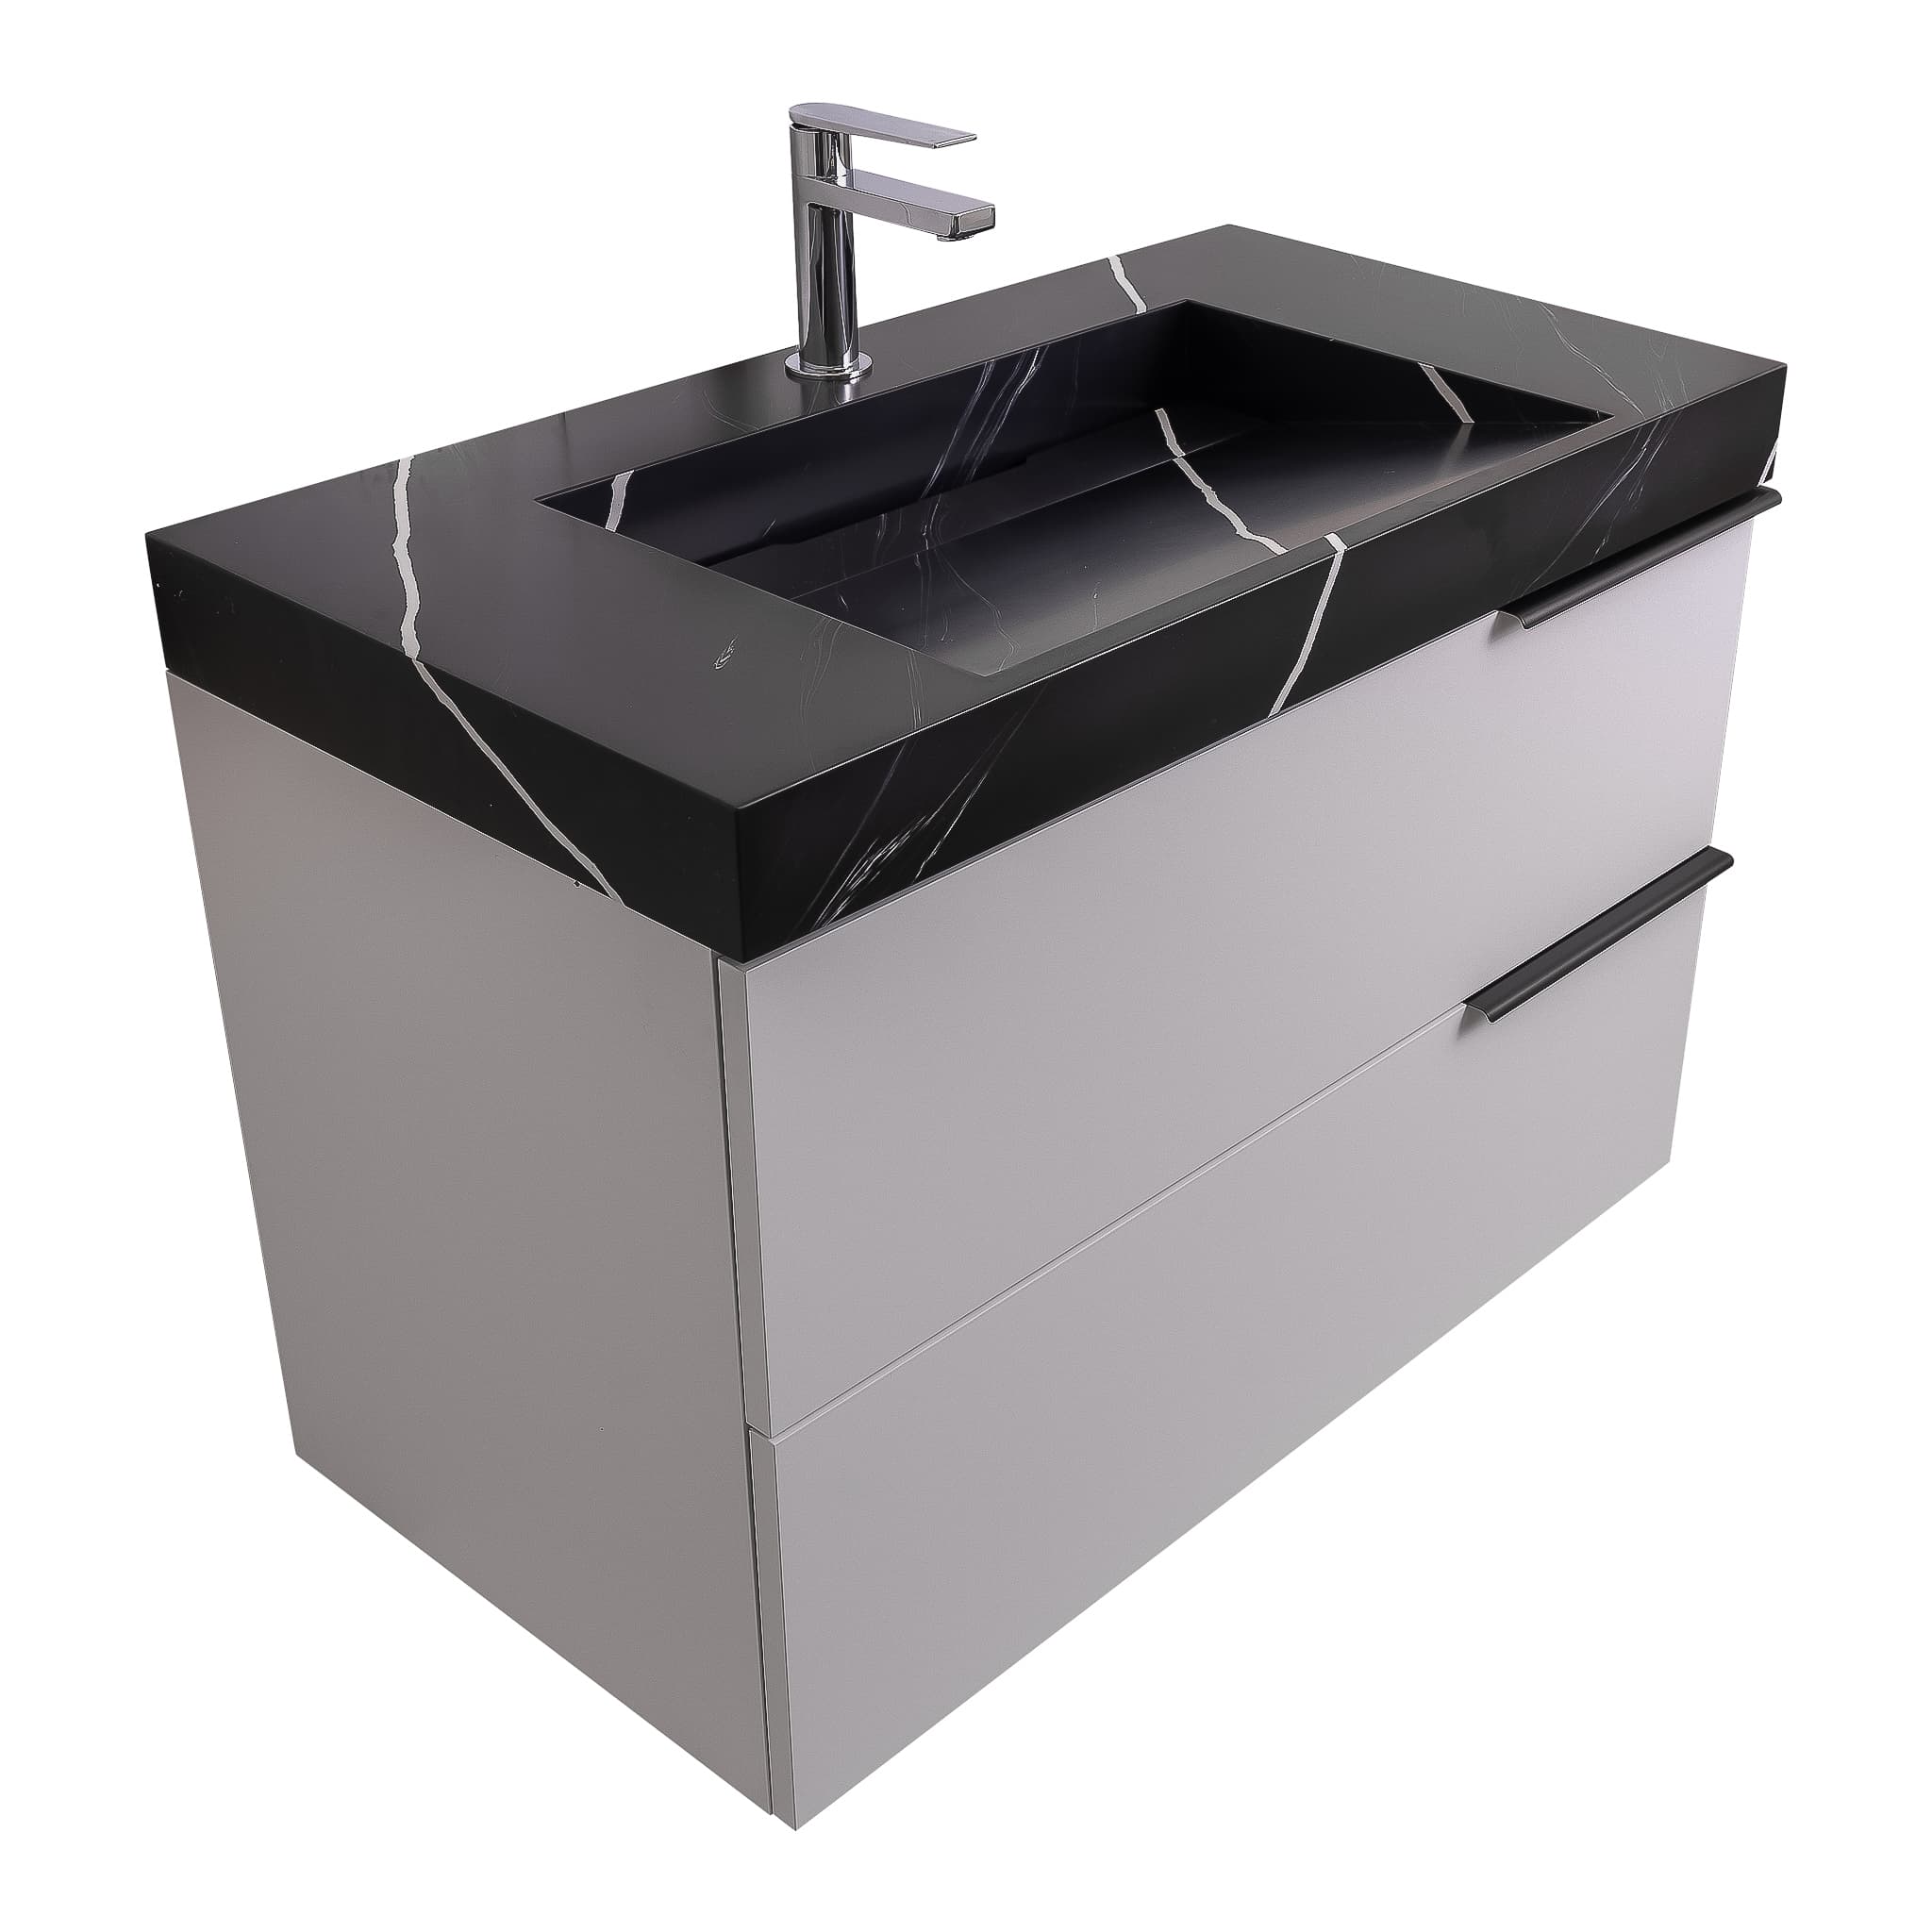 Mallorca 39.5 Matte White Cabinet, Solid Surface Matte Black Carrara Infinity Sink, Wall Mounted Modern Vanity Set